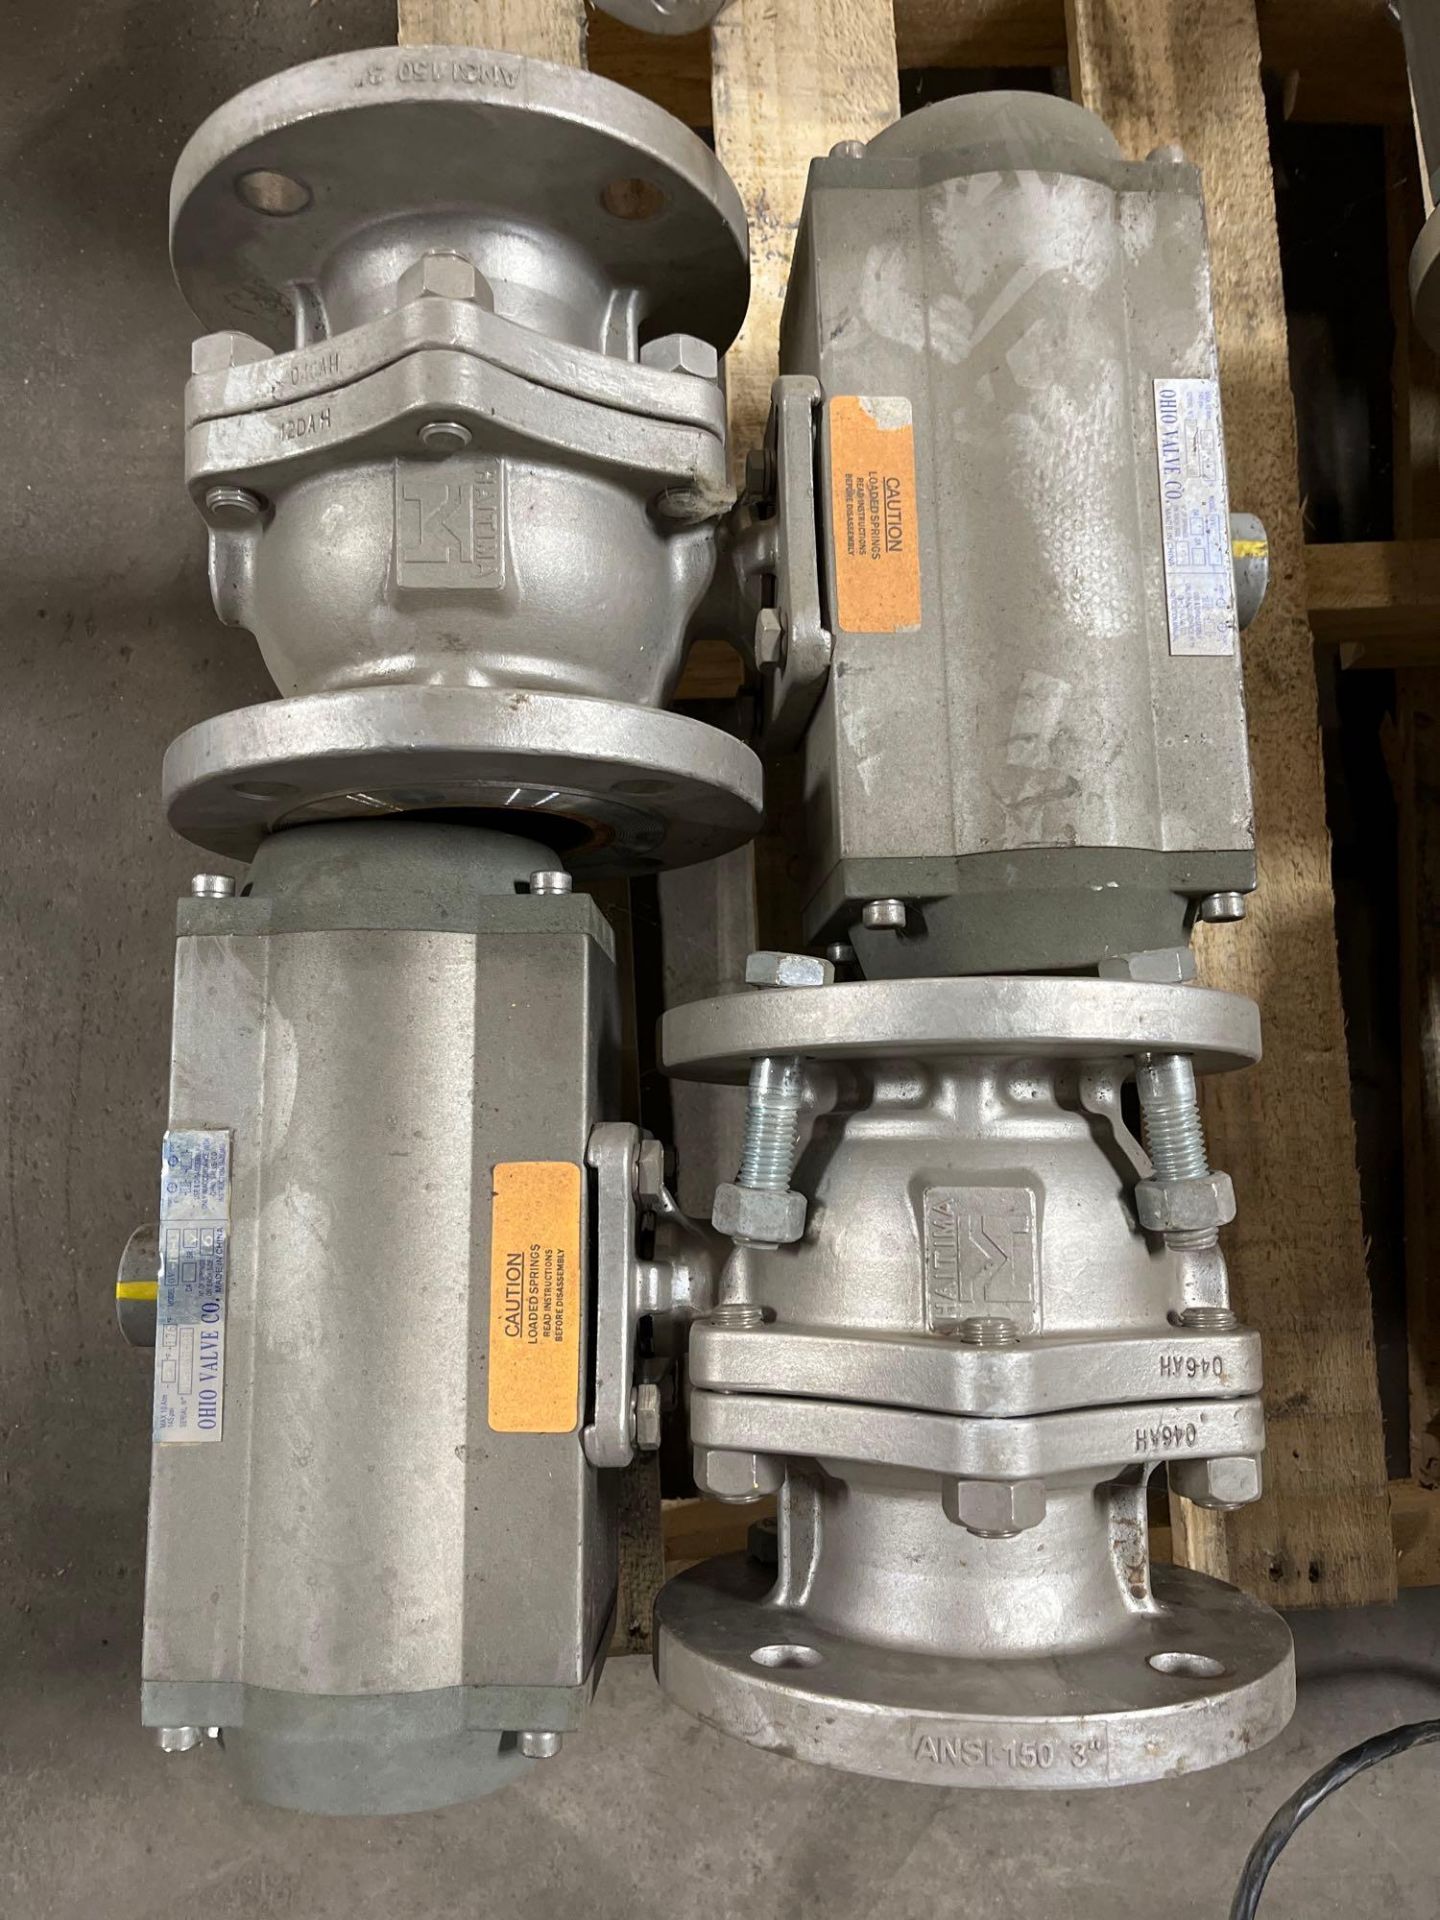 Ohio valves